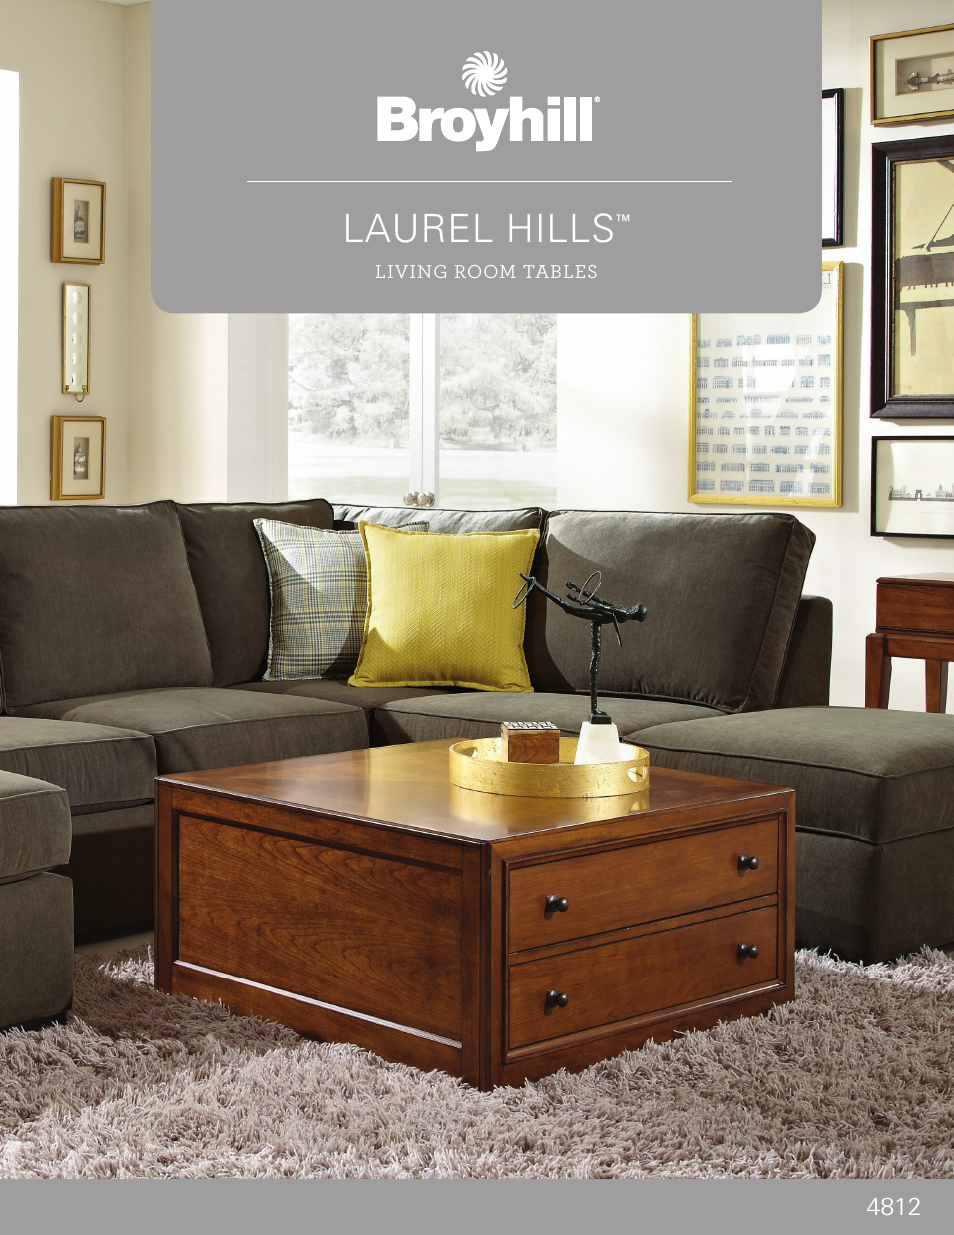 LAUREL HILLS CHAIRSIDE CHEST Product Details